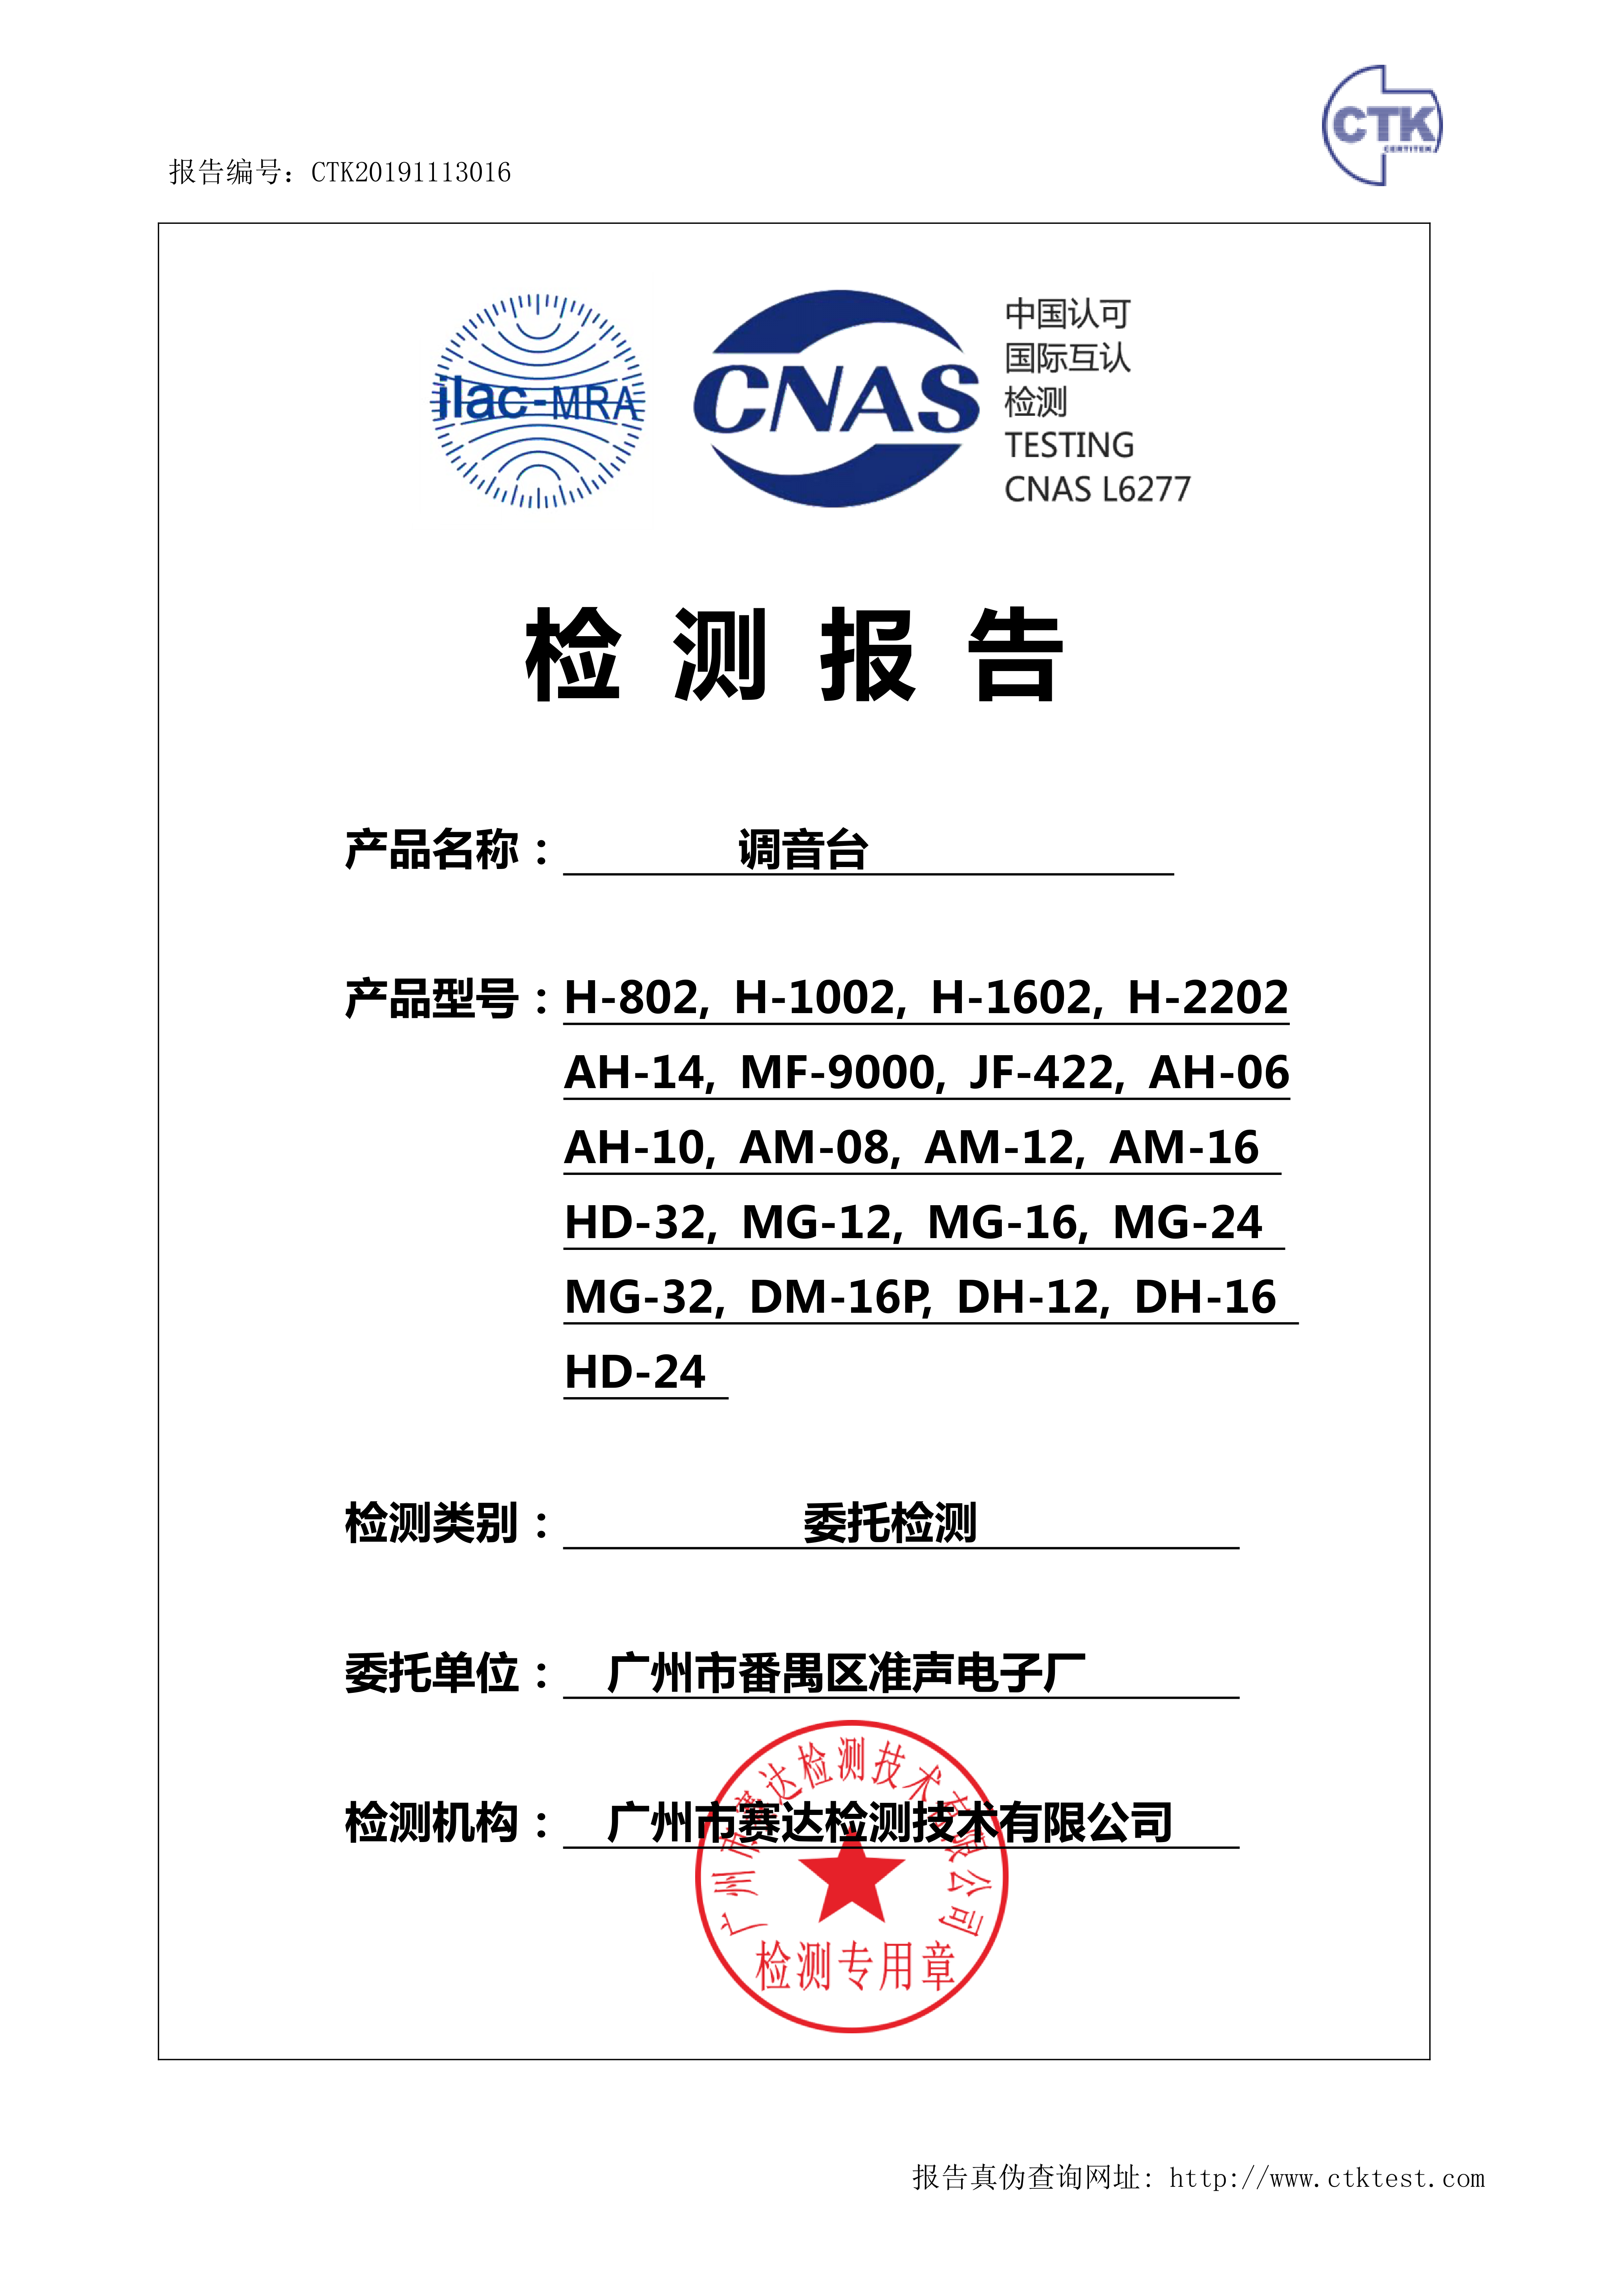 AM-16 调音台 CNAS委托测试报告_1